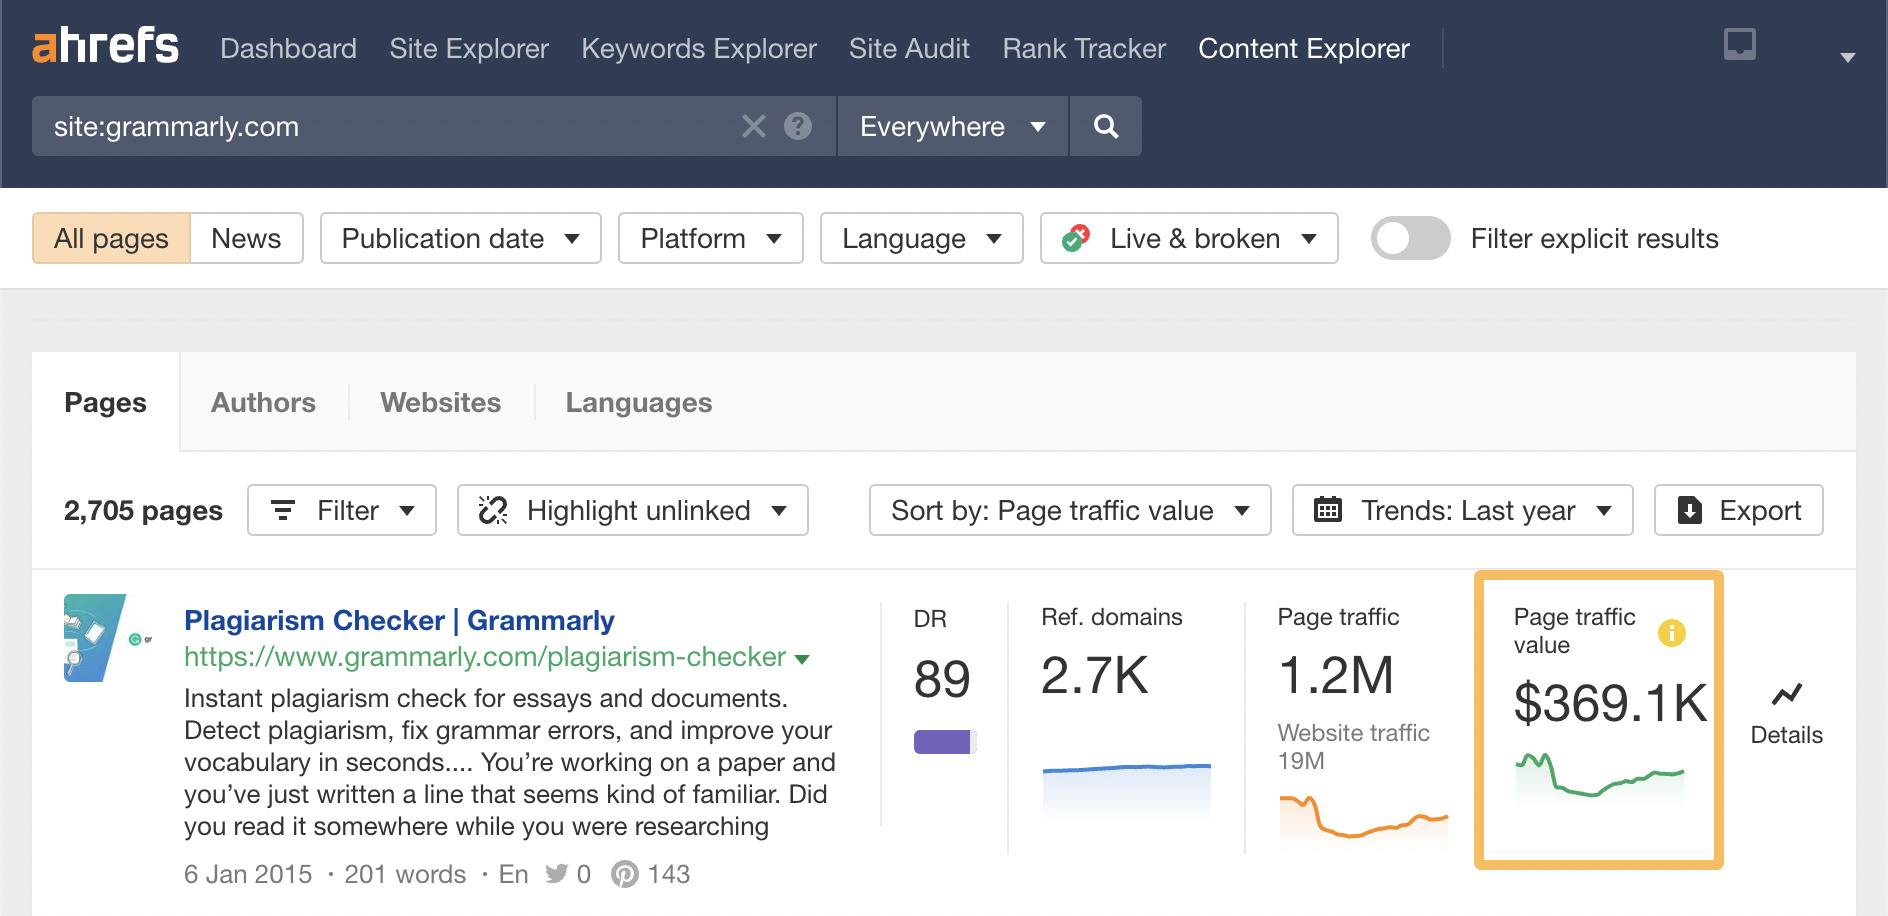 Page traffic value, via Ahrefs' Content Explorer
